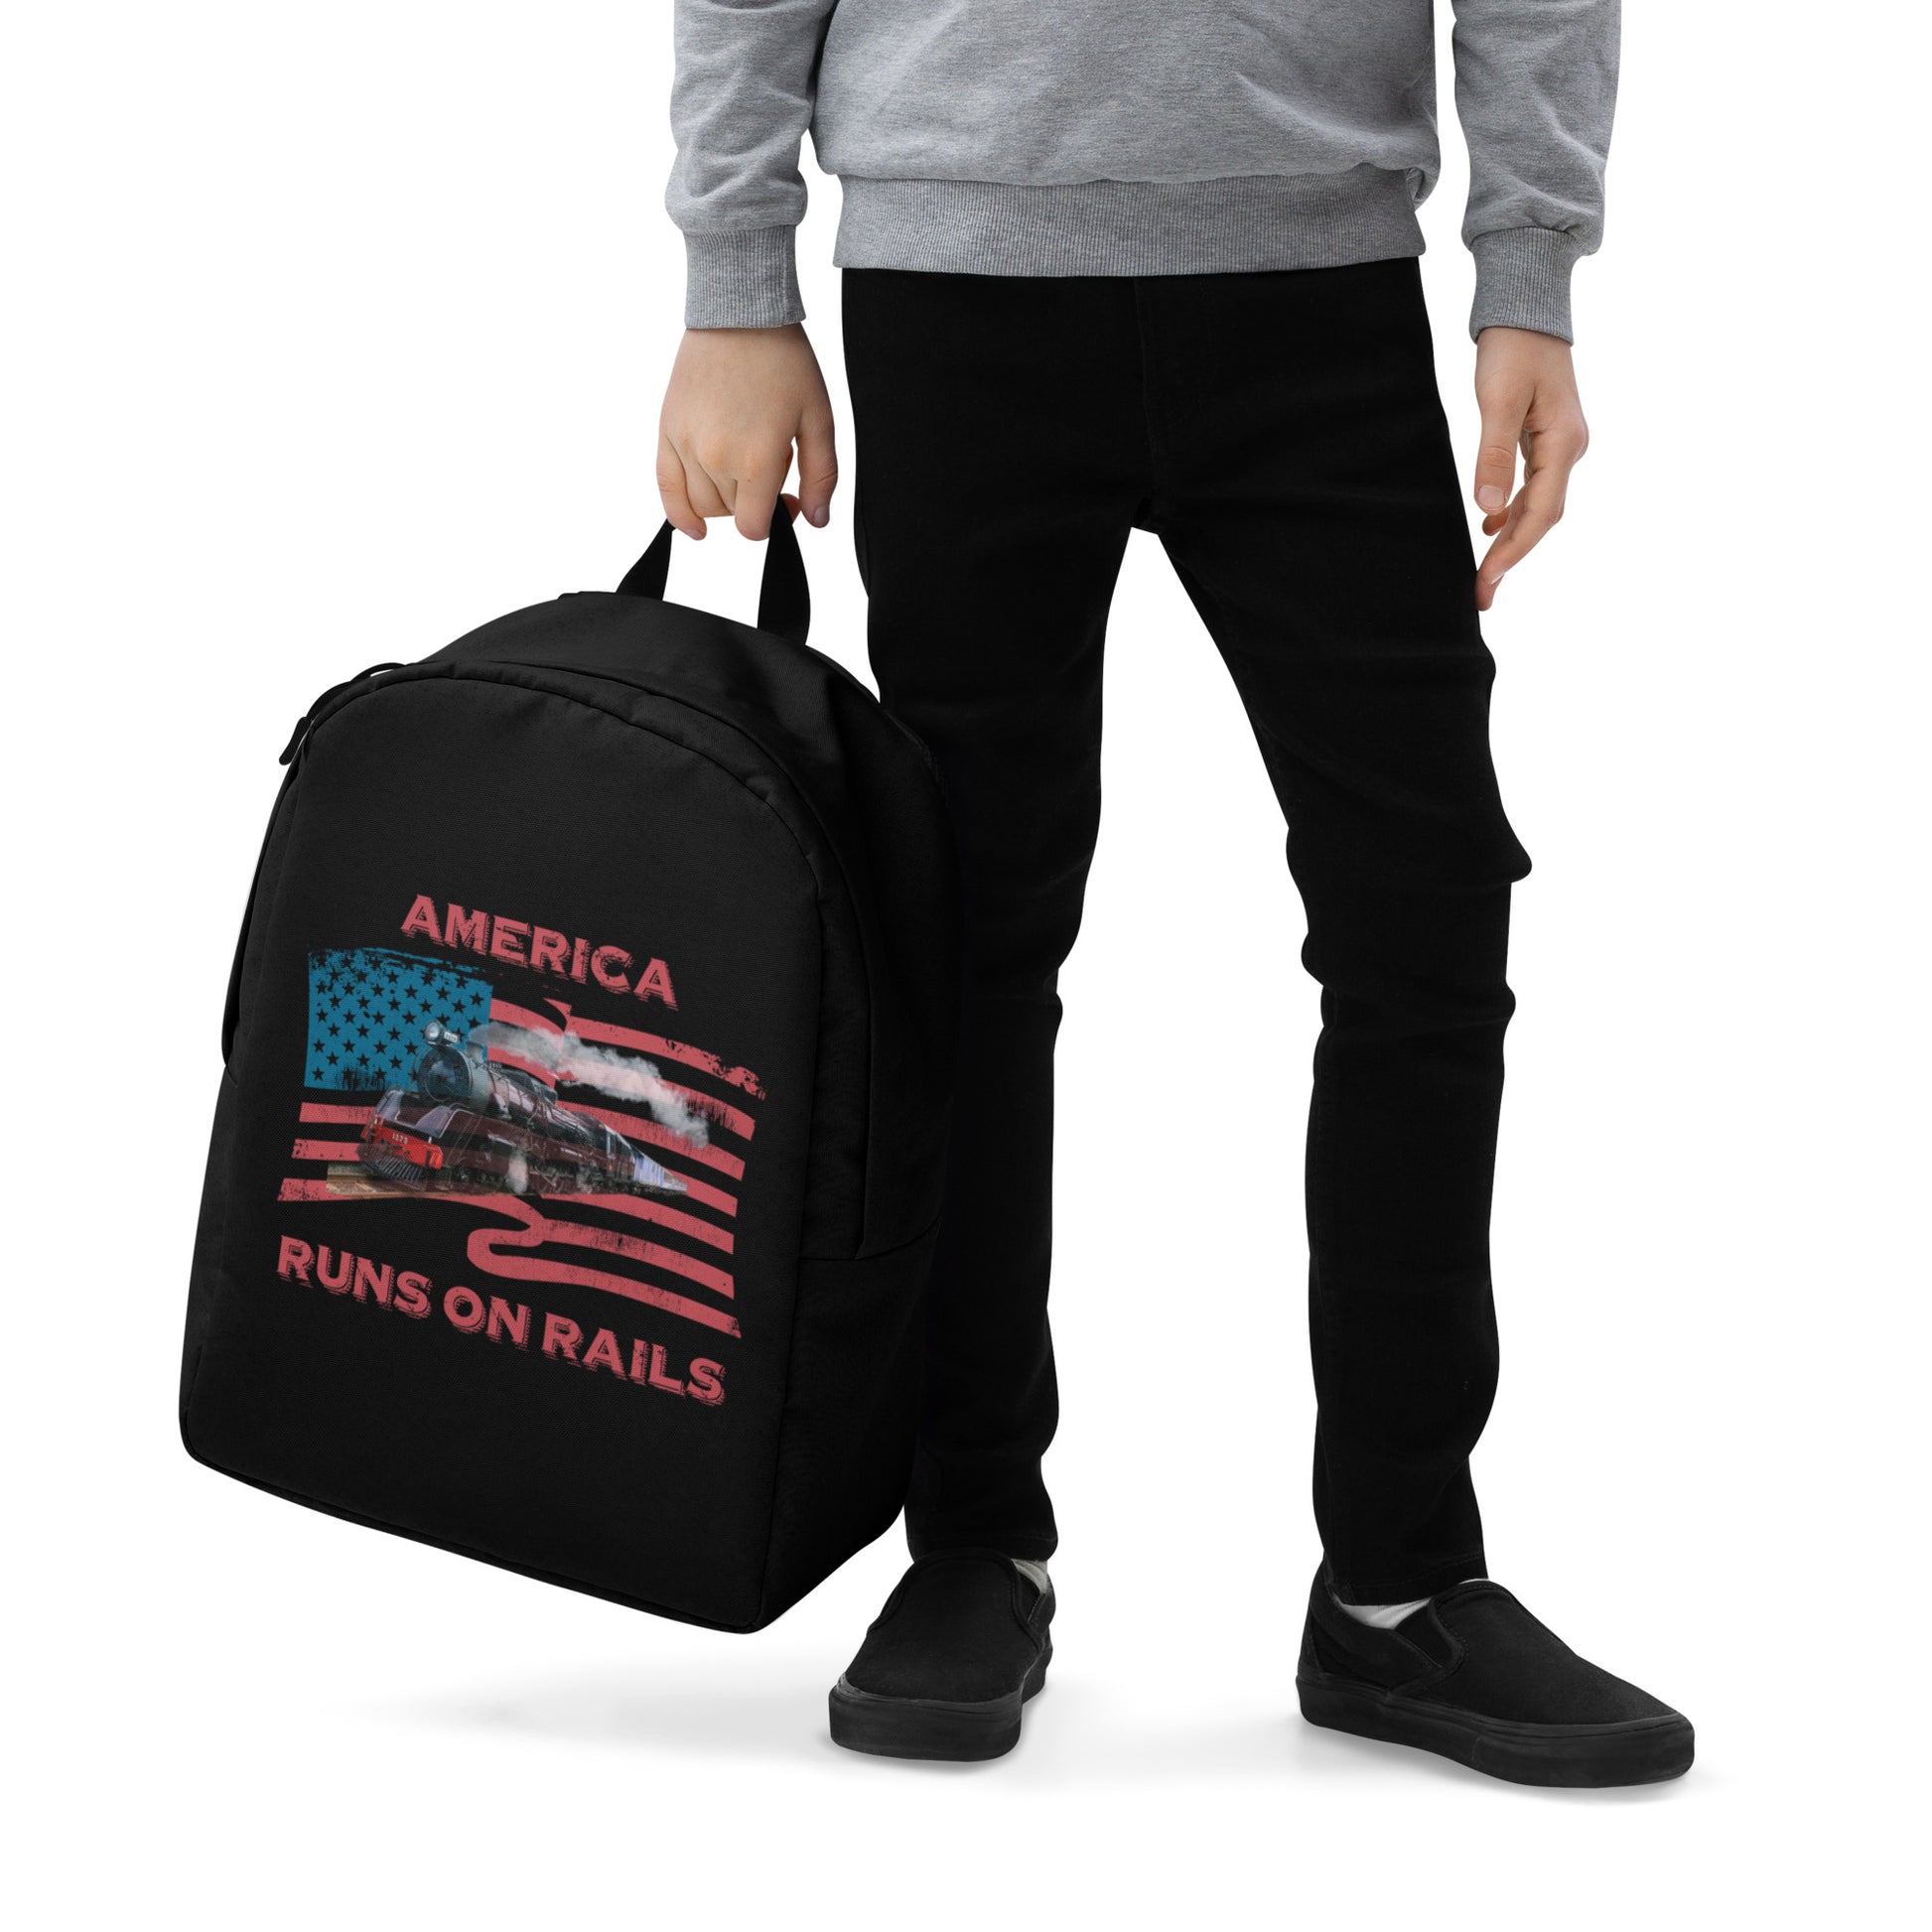 America Runs on Rails Minimalist Backpack - Broken Knuckle Apparel